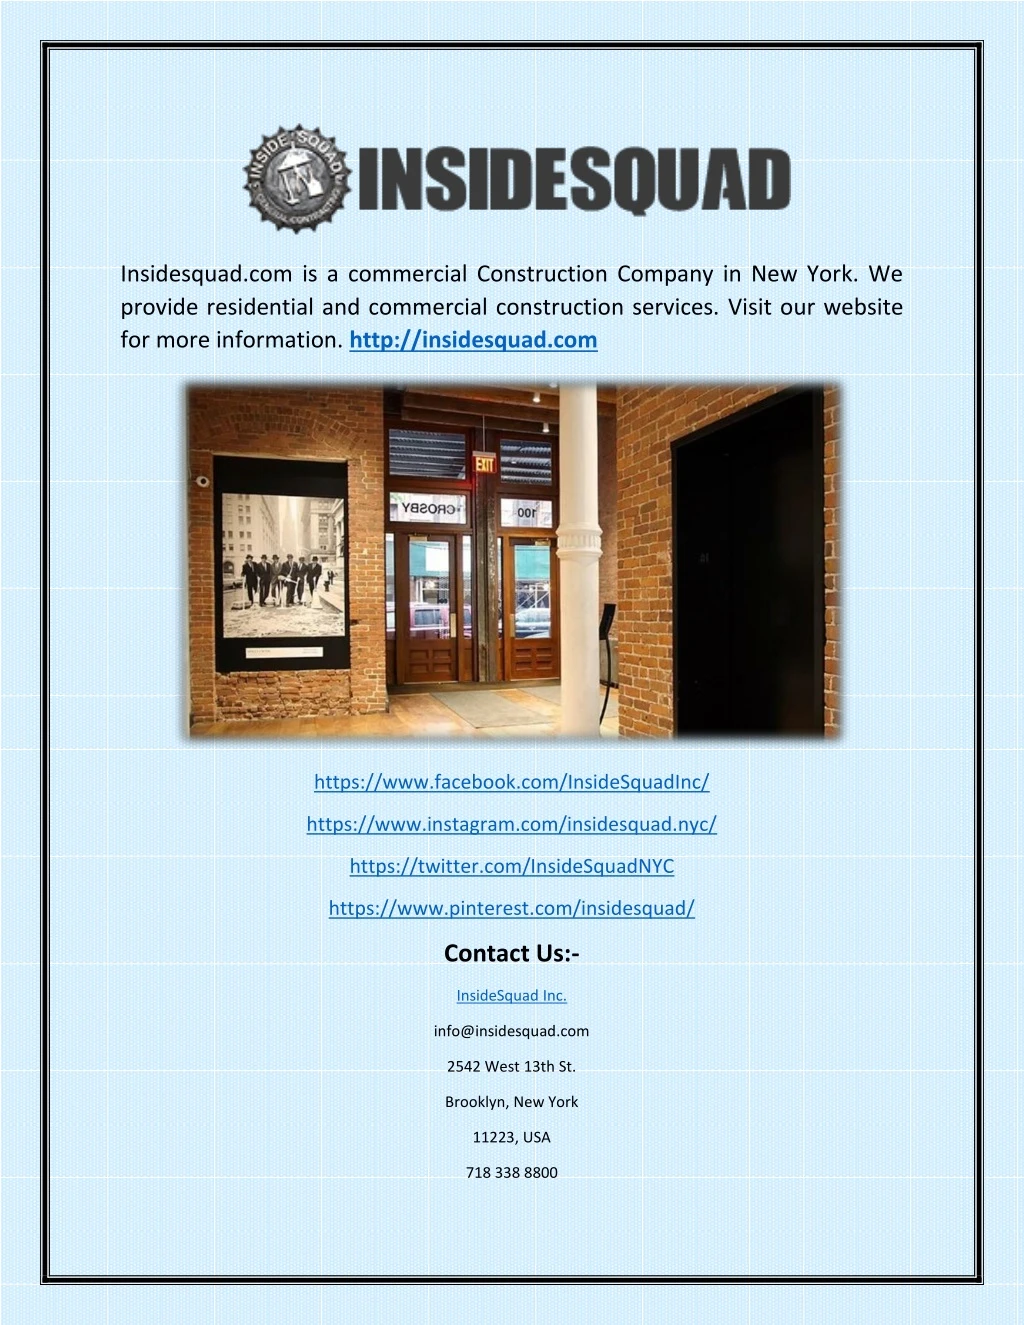 insidesquad com is a commercial construction